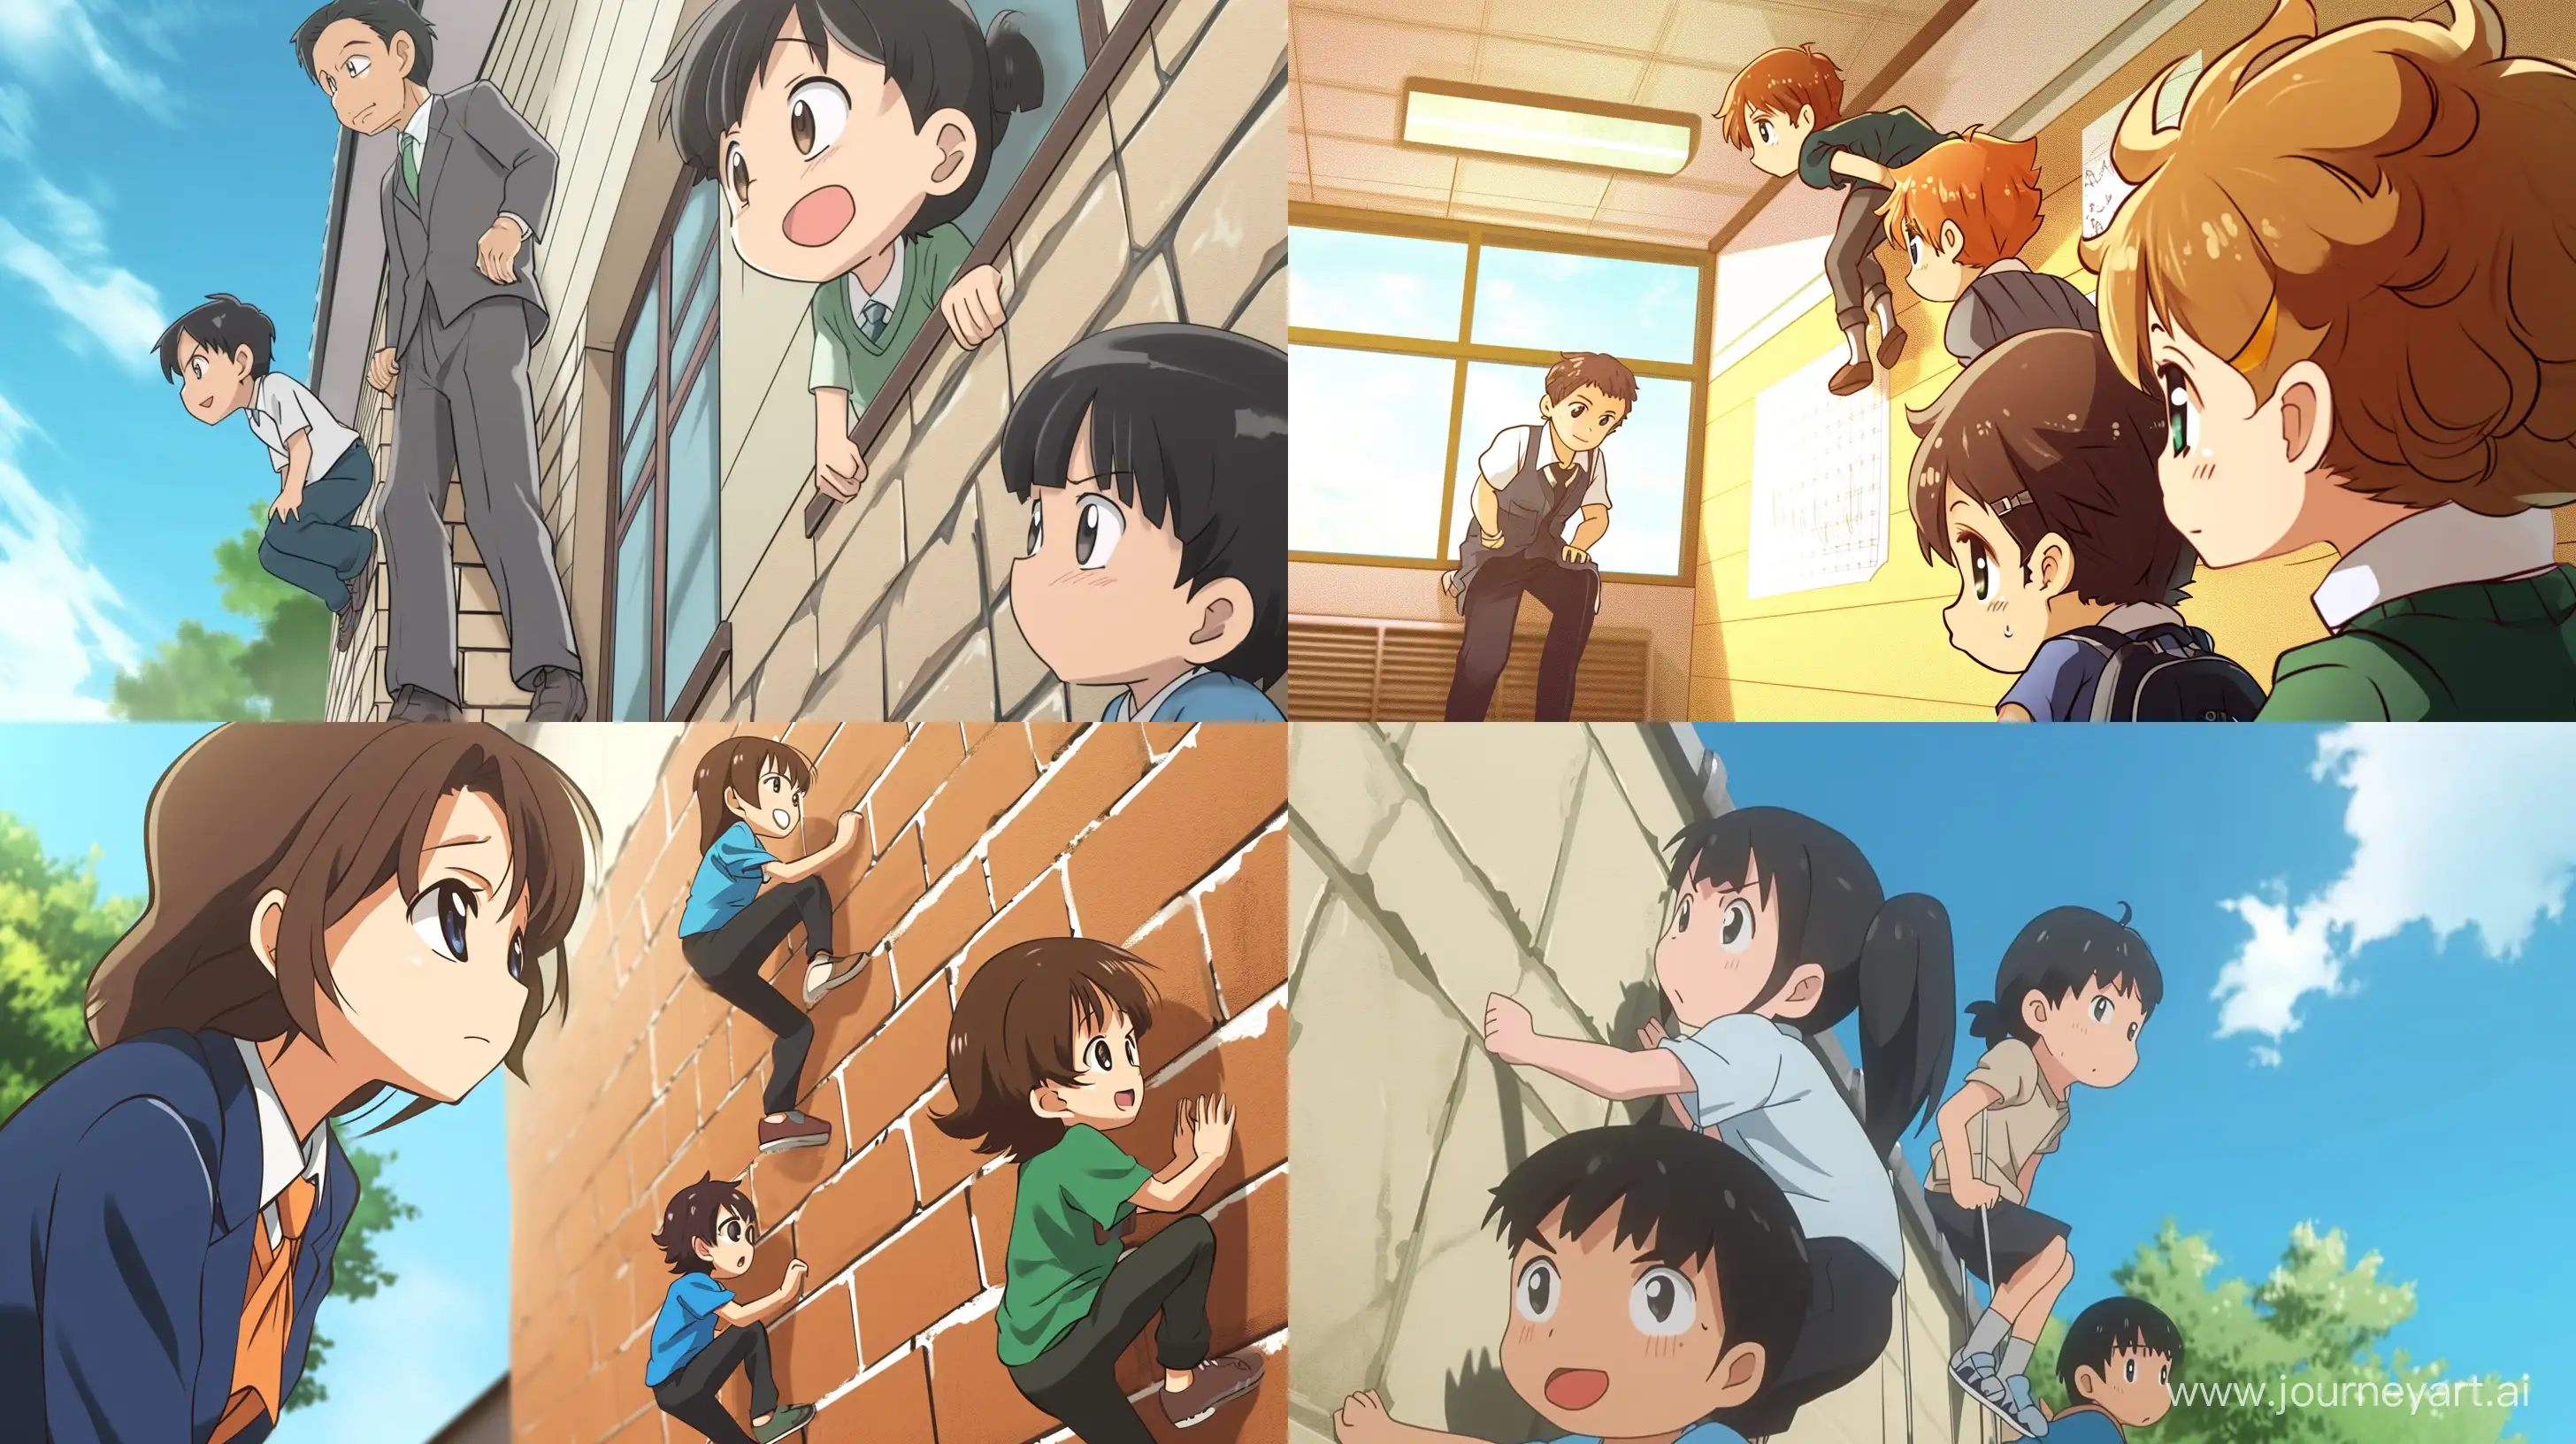 Chibi-Anime-Scene-Students-Climbing-Wall-to-Class